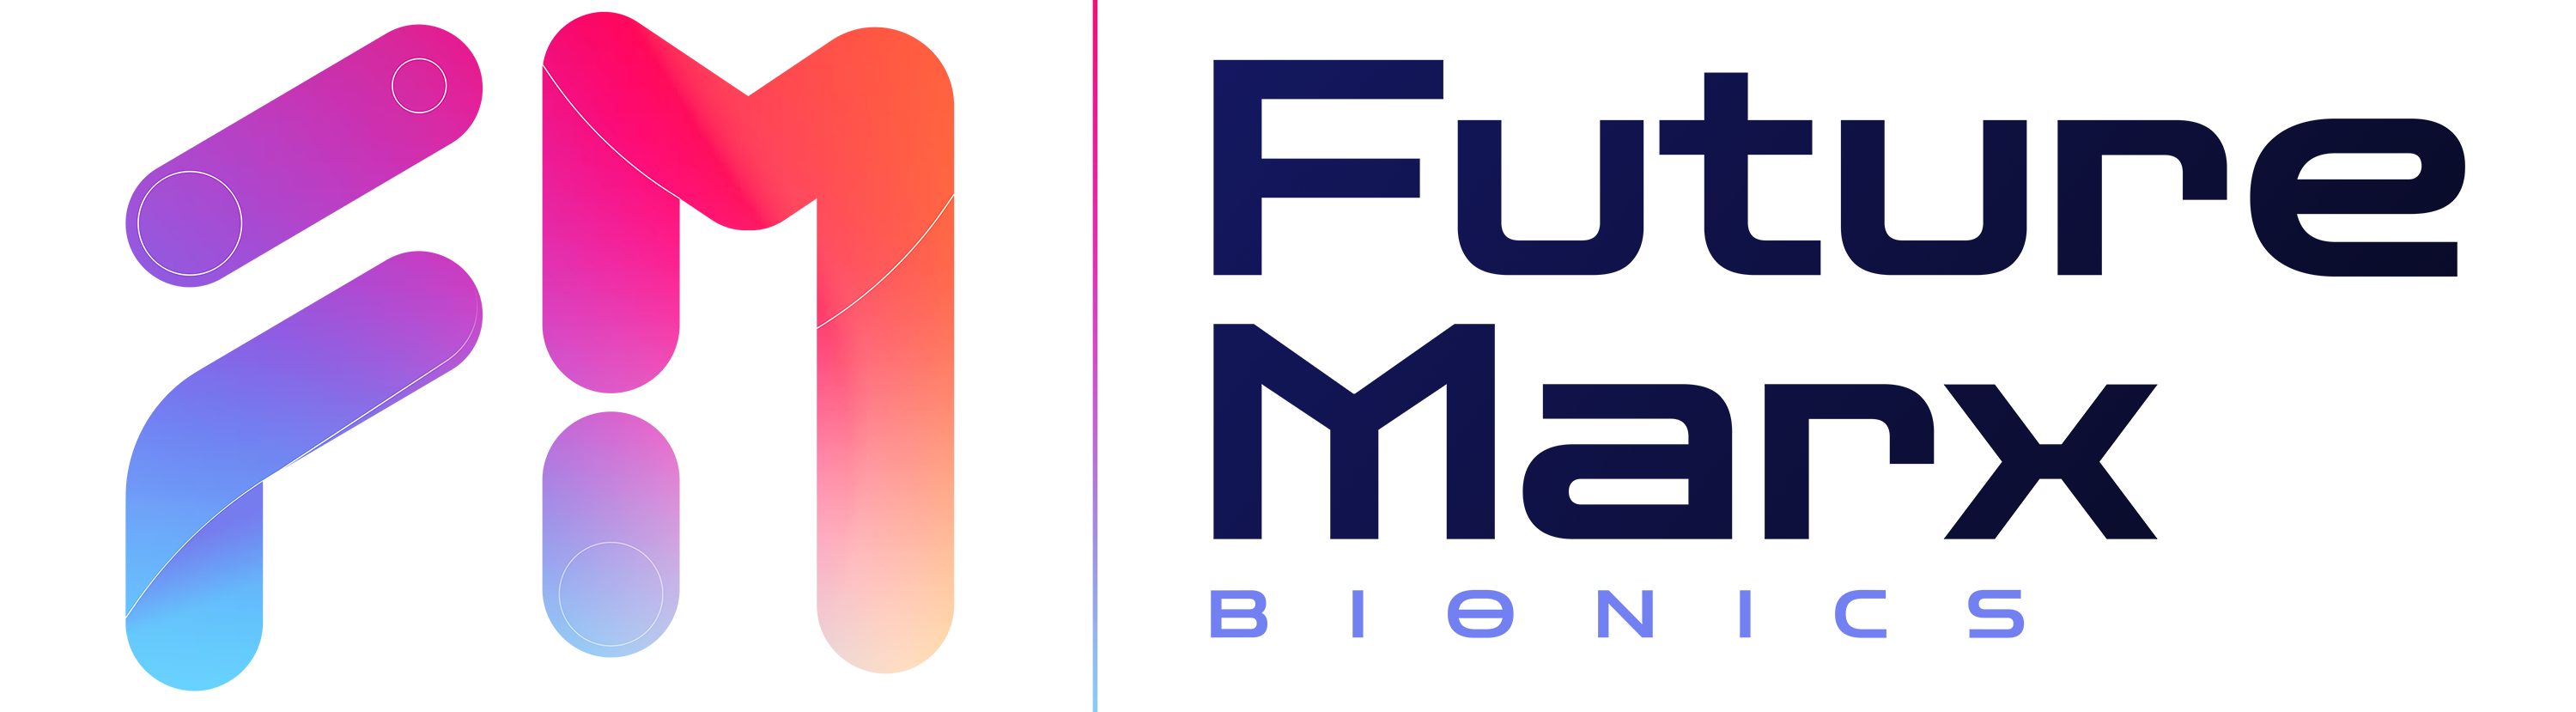 Futuremarx